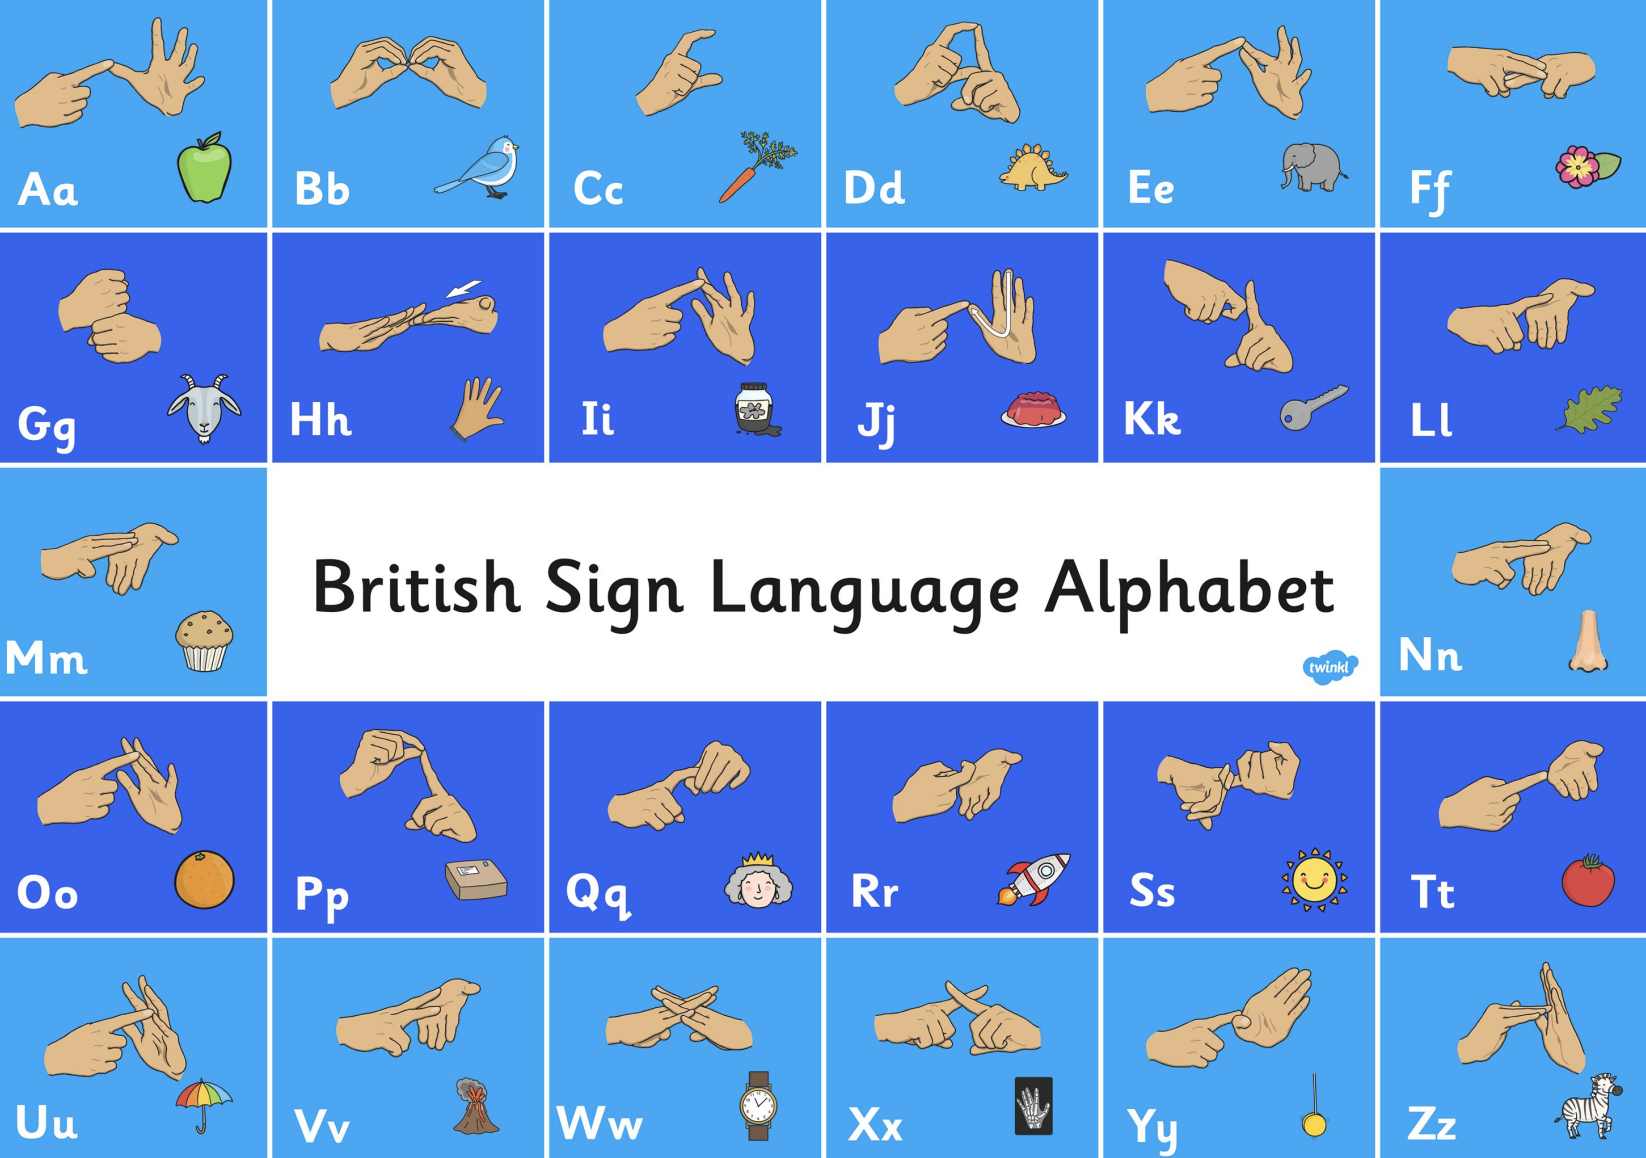 bsl-alphabet-british-sign-language-british-sign-language-alphabet-a-z